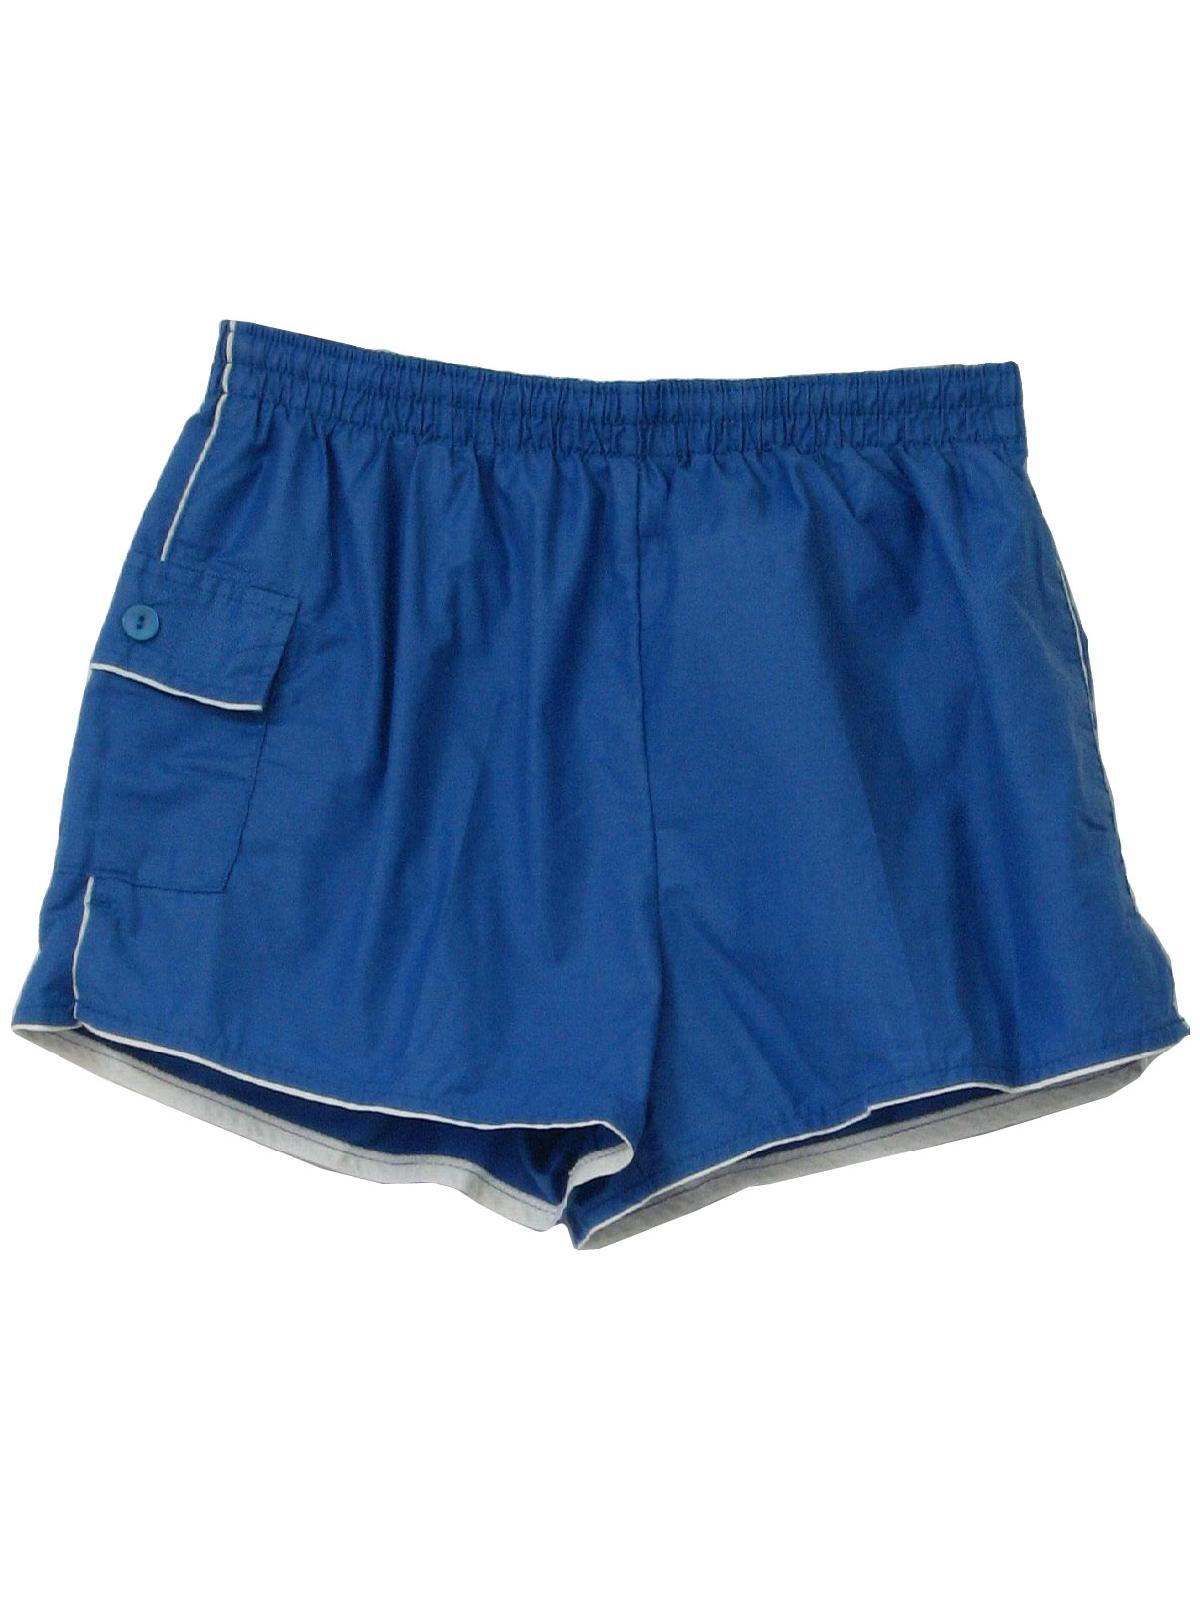 Retro 1980's Swimsuit/Swimwear (JCPenney) : 80s -JCPenney- Mens blue ...